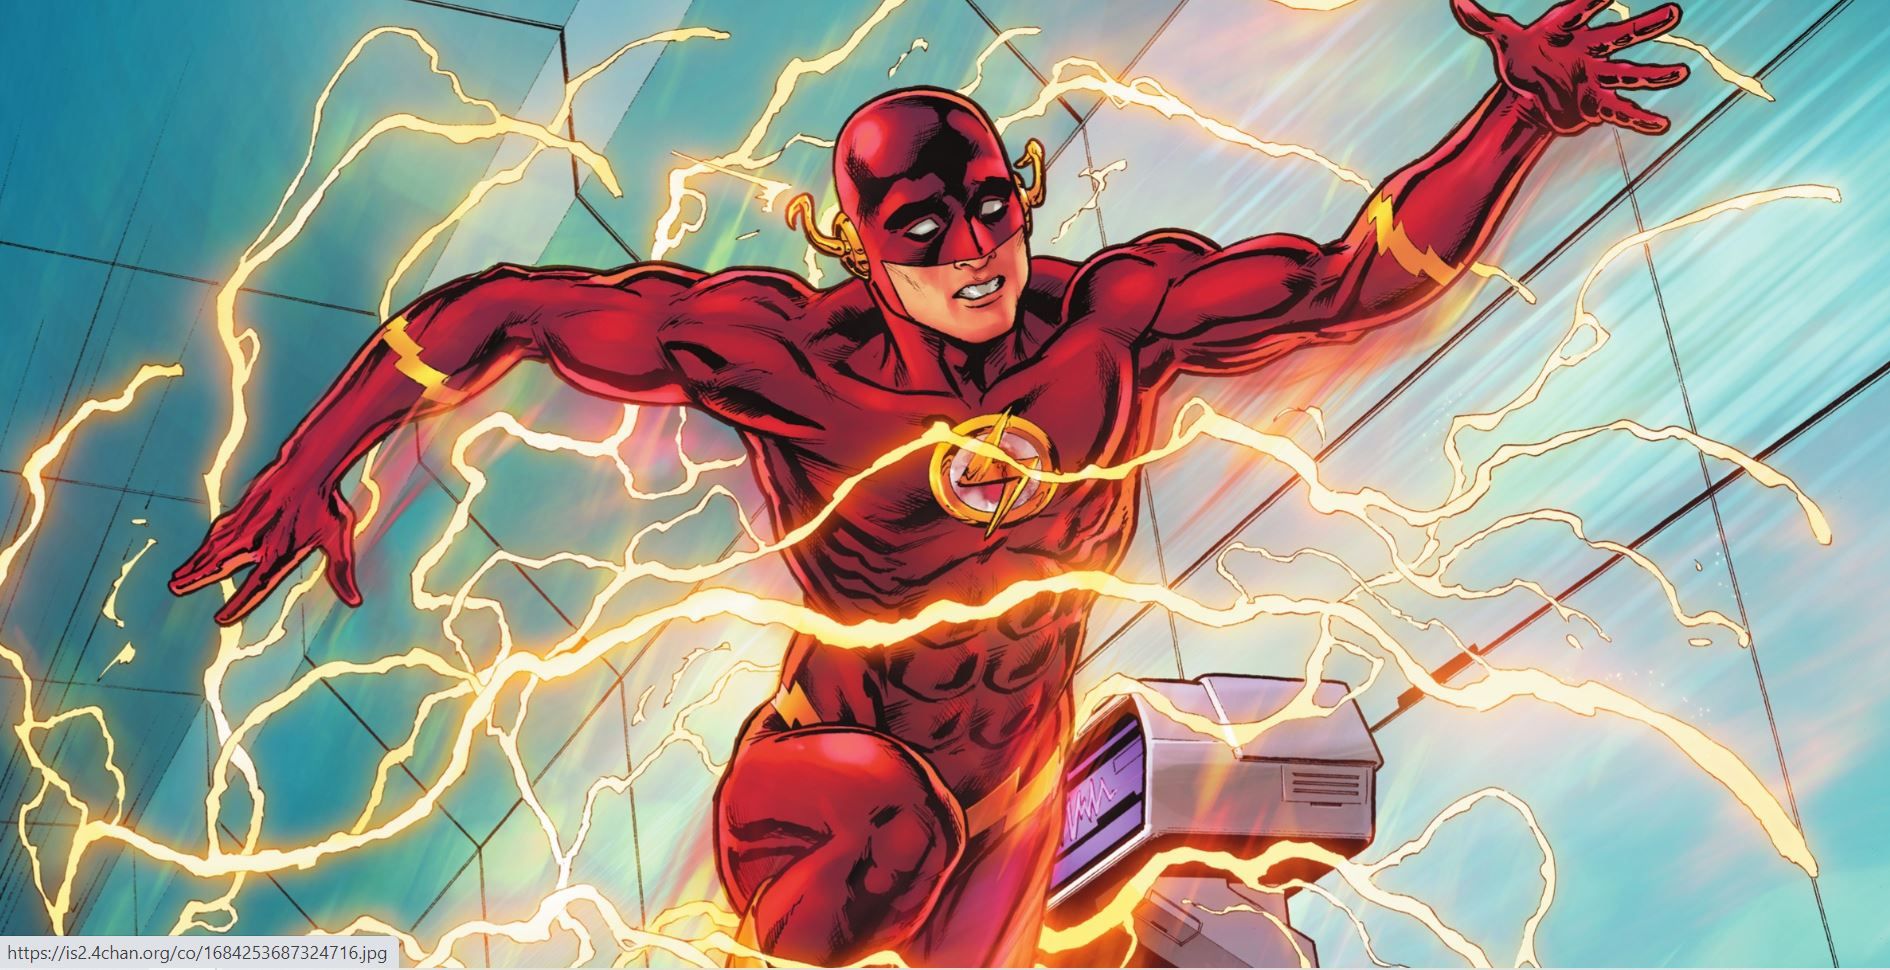 Flash Running for his Life DC Comics